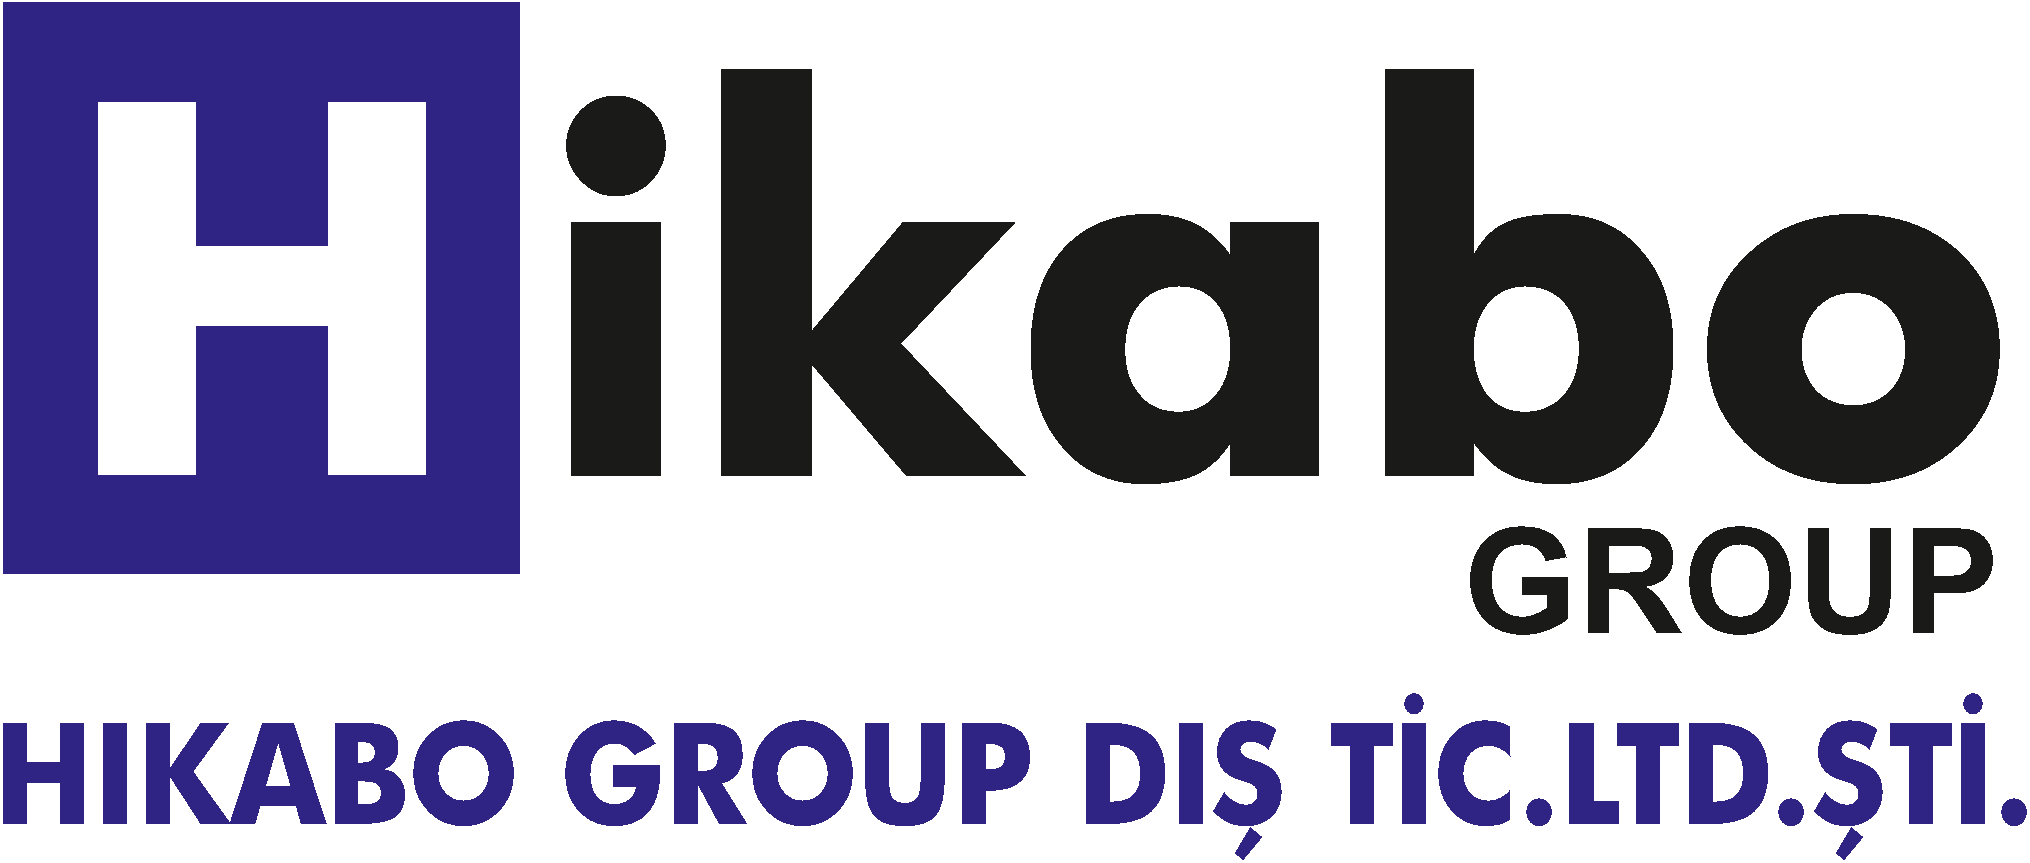 Hikabo Group